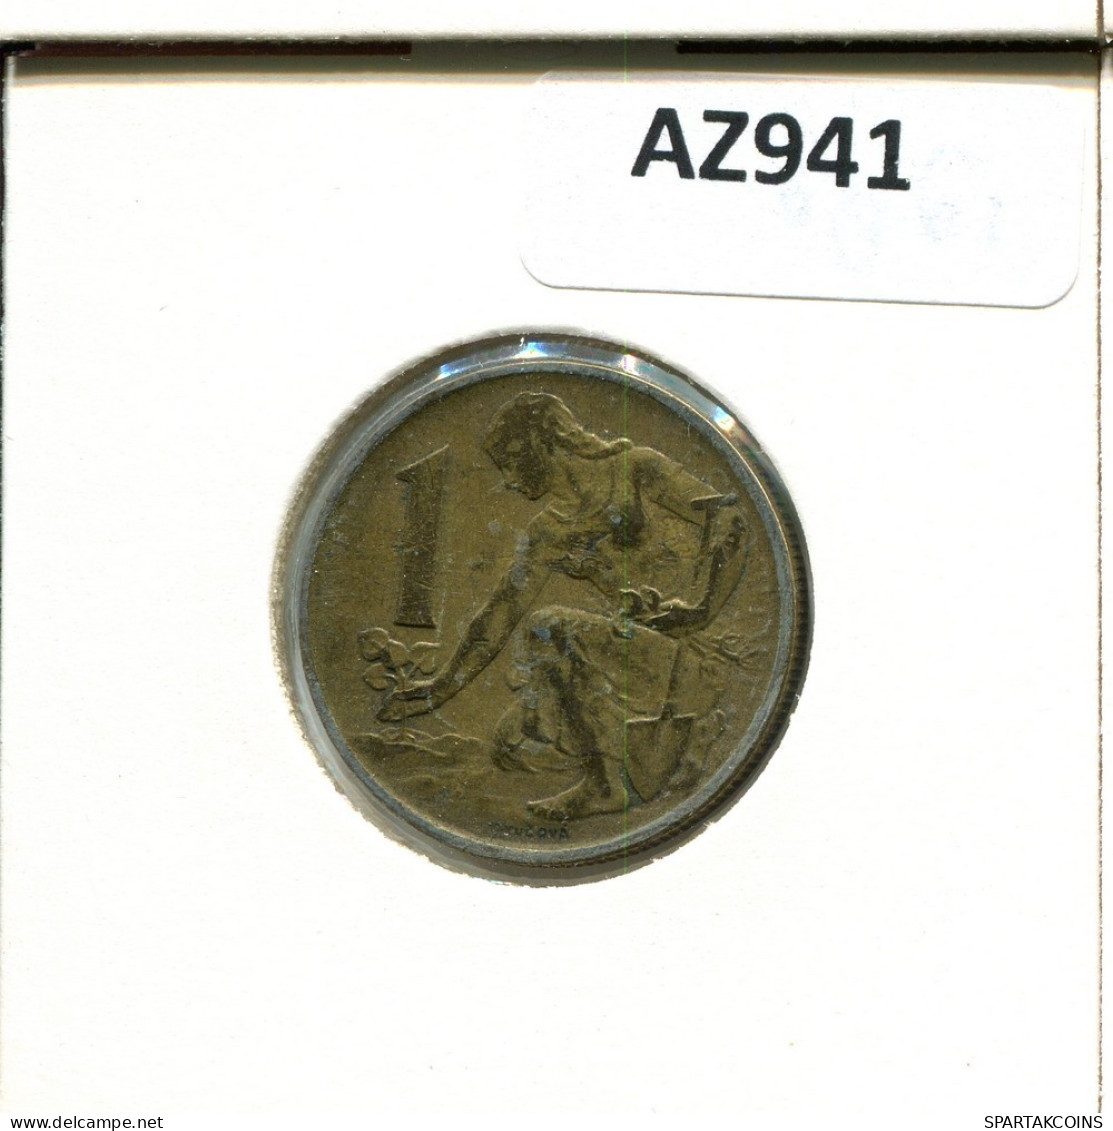 1 KORUNA 1980 CZECHOSLOVAKIA Coin #AZ941.U.A - Czechoslovakia